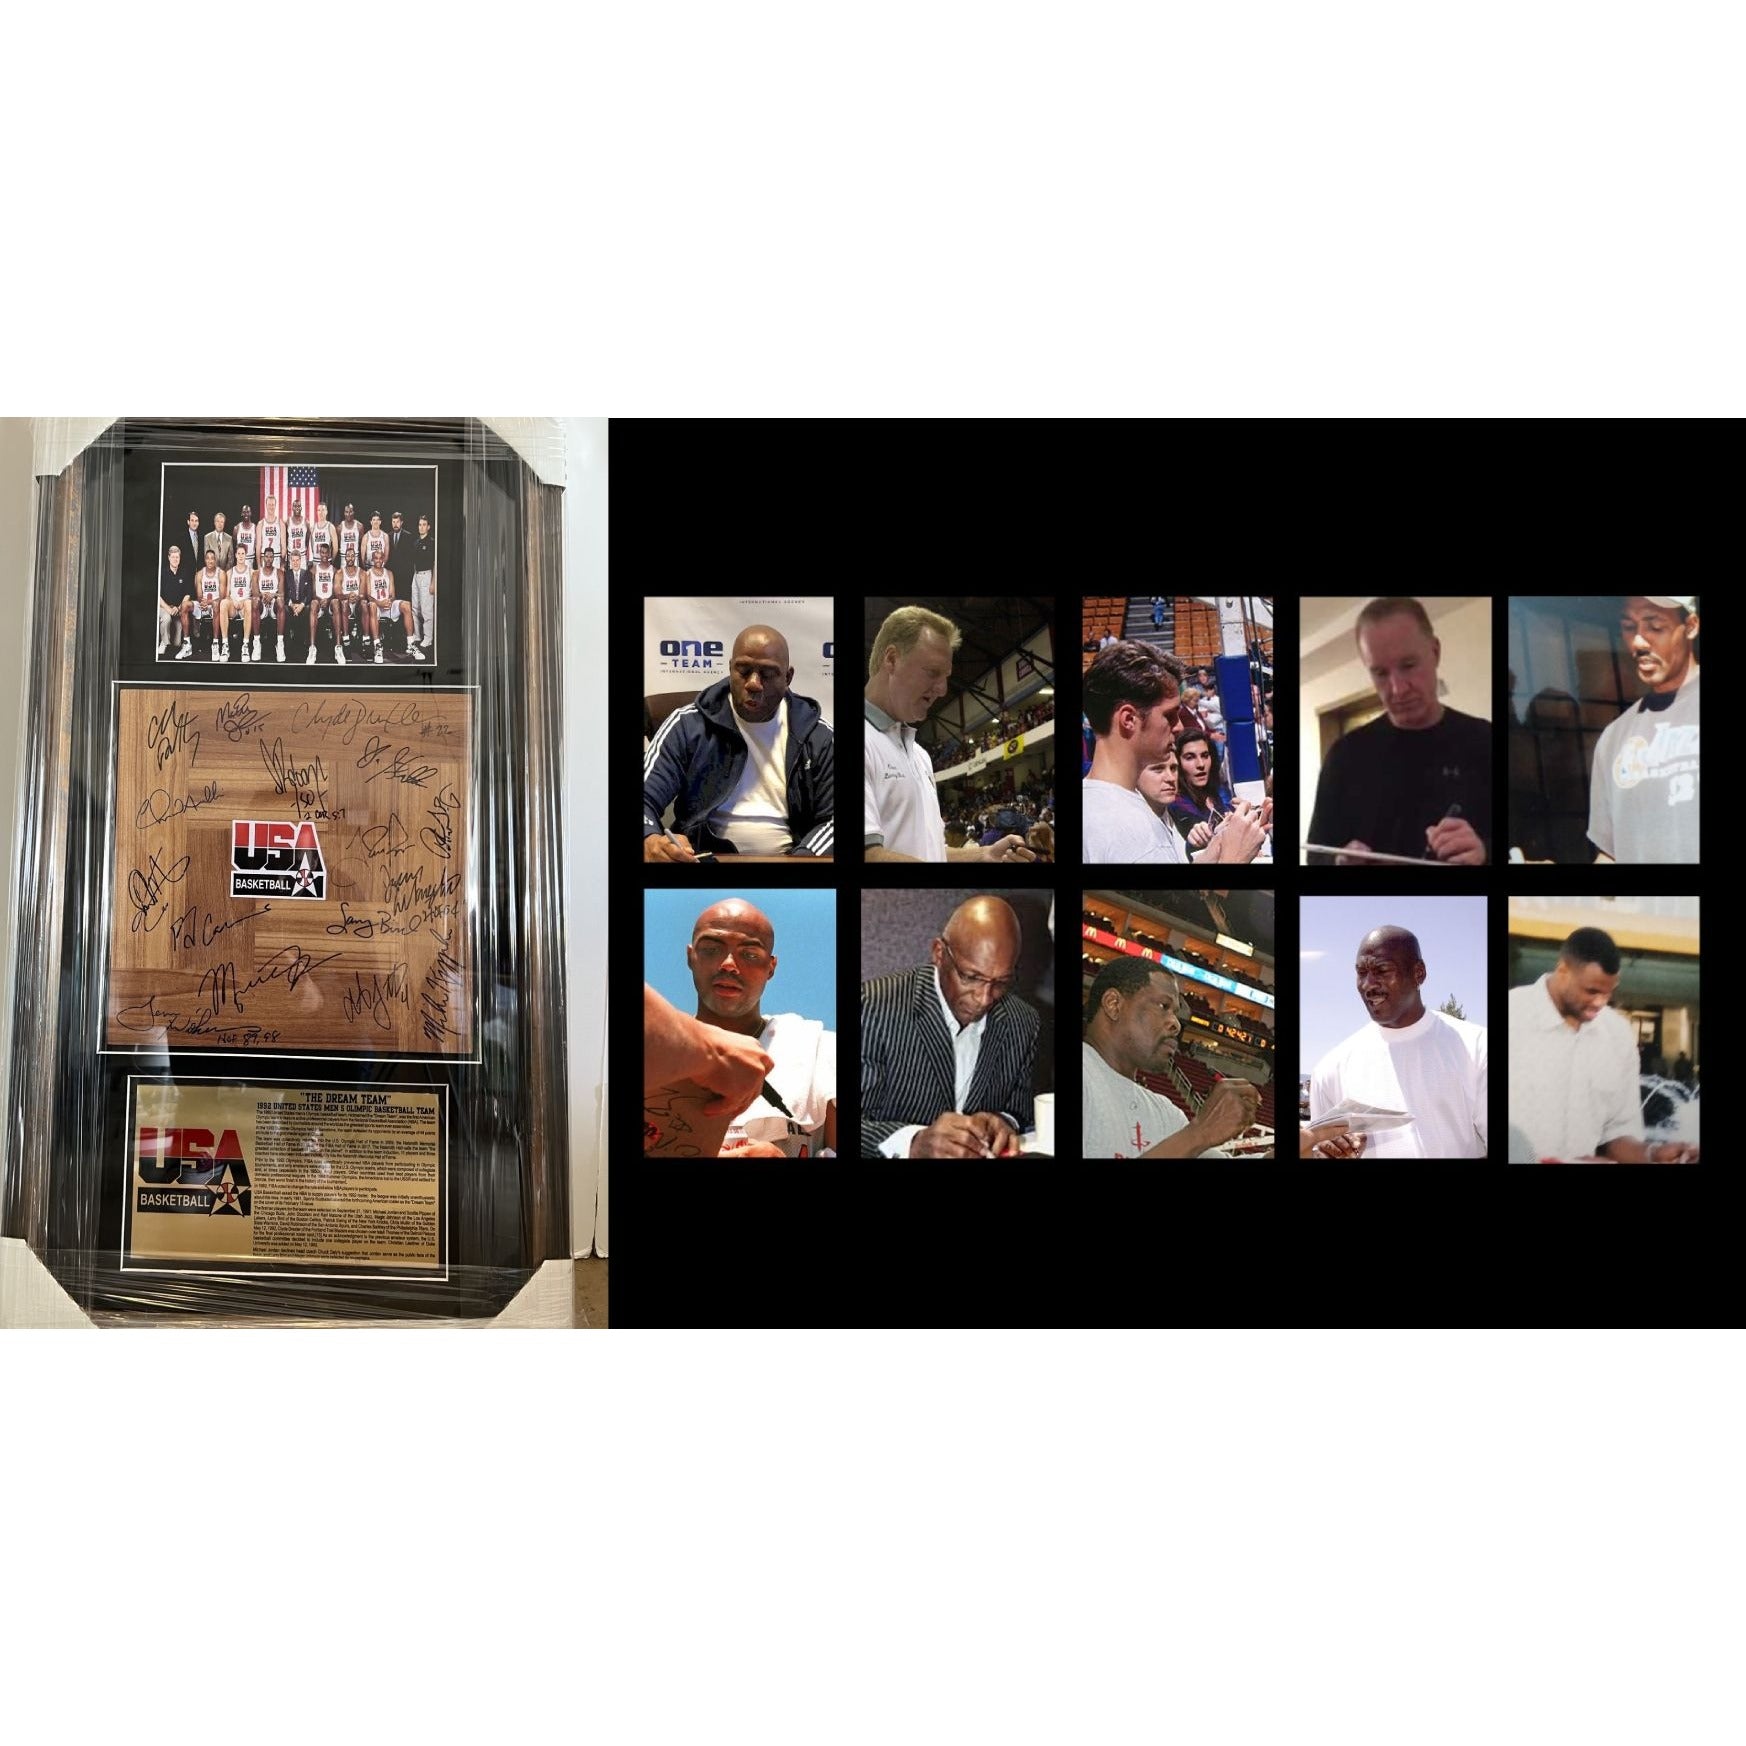 Michael Jordan Larry Bird Magic Johnson Charles Barkley 1992 Team USA Dream Team parquet wood floorboard signed and framed